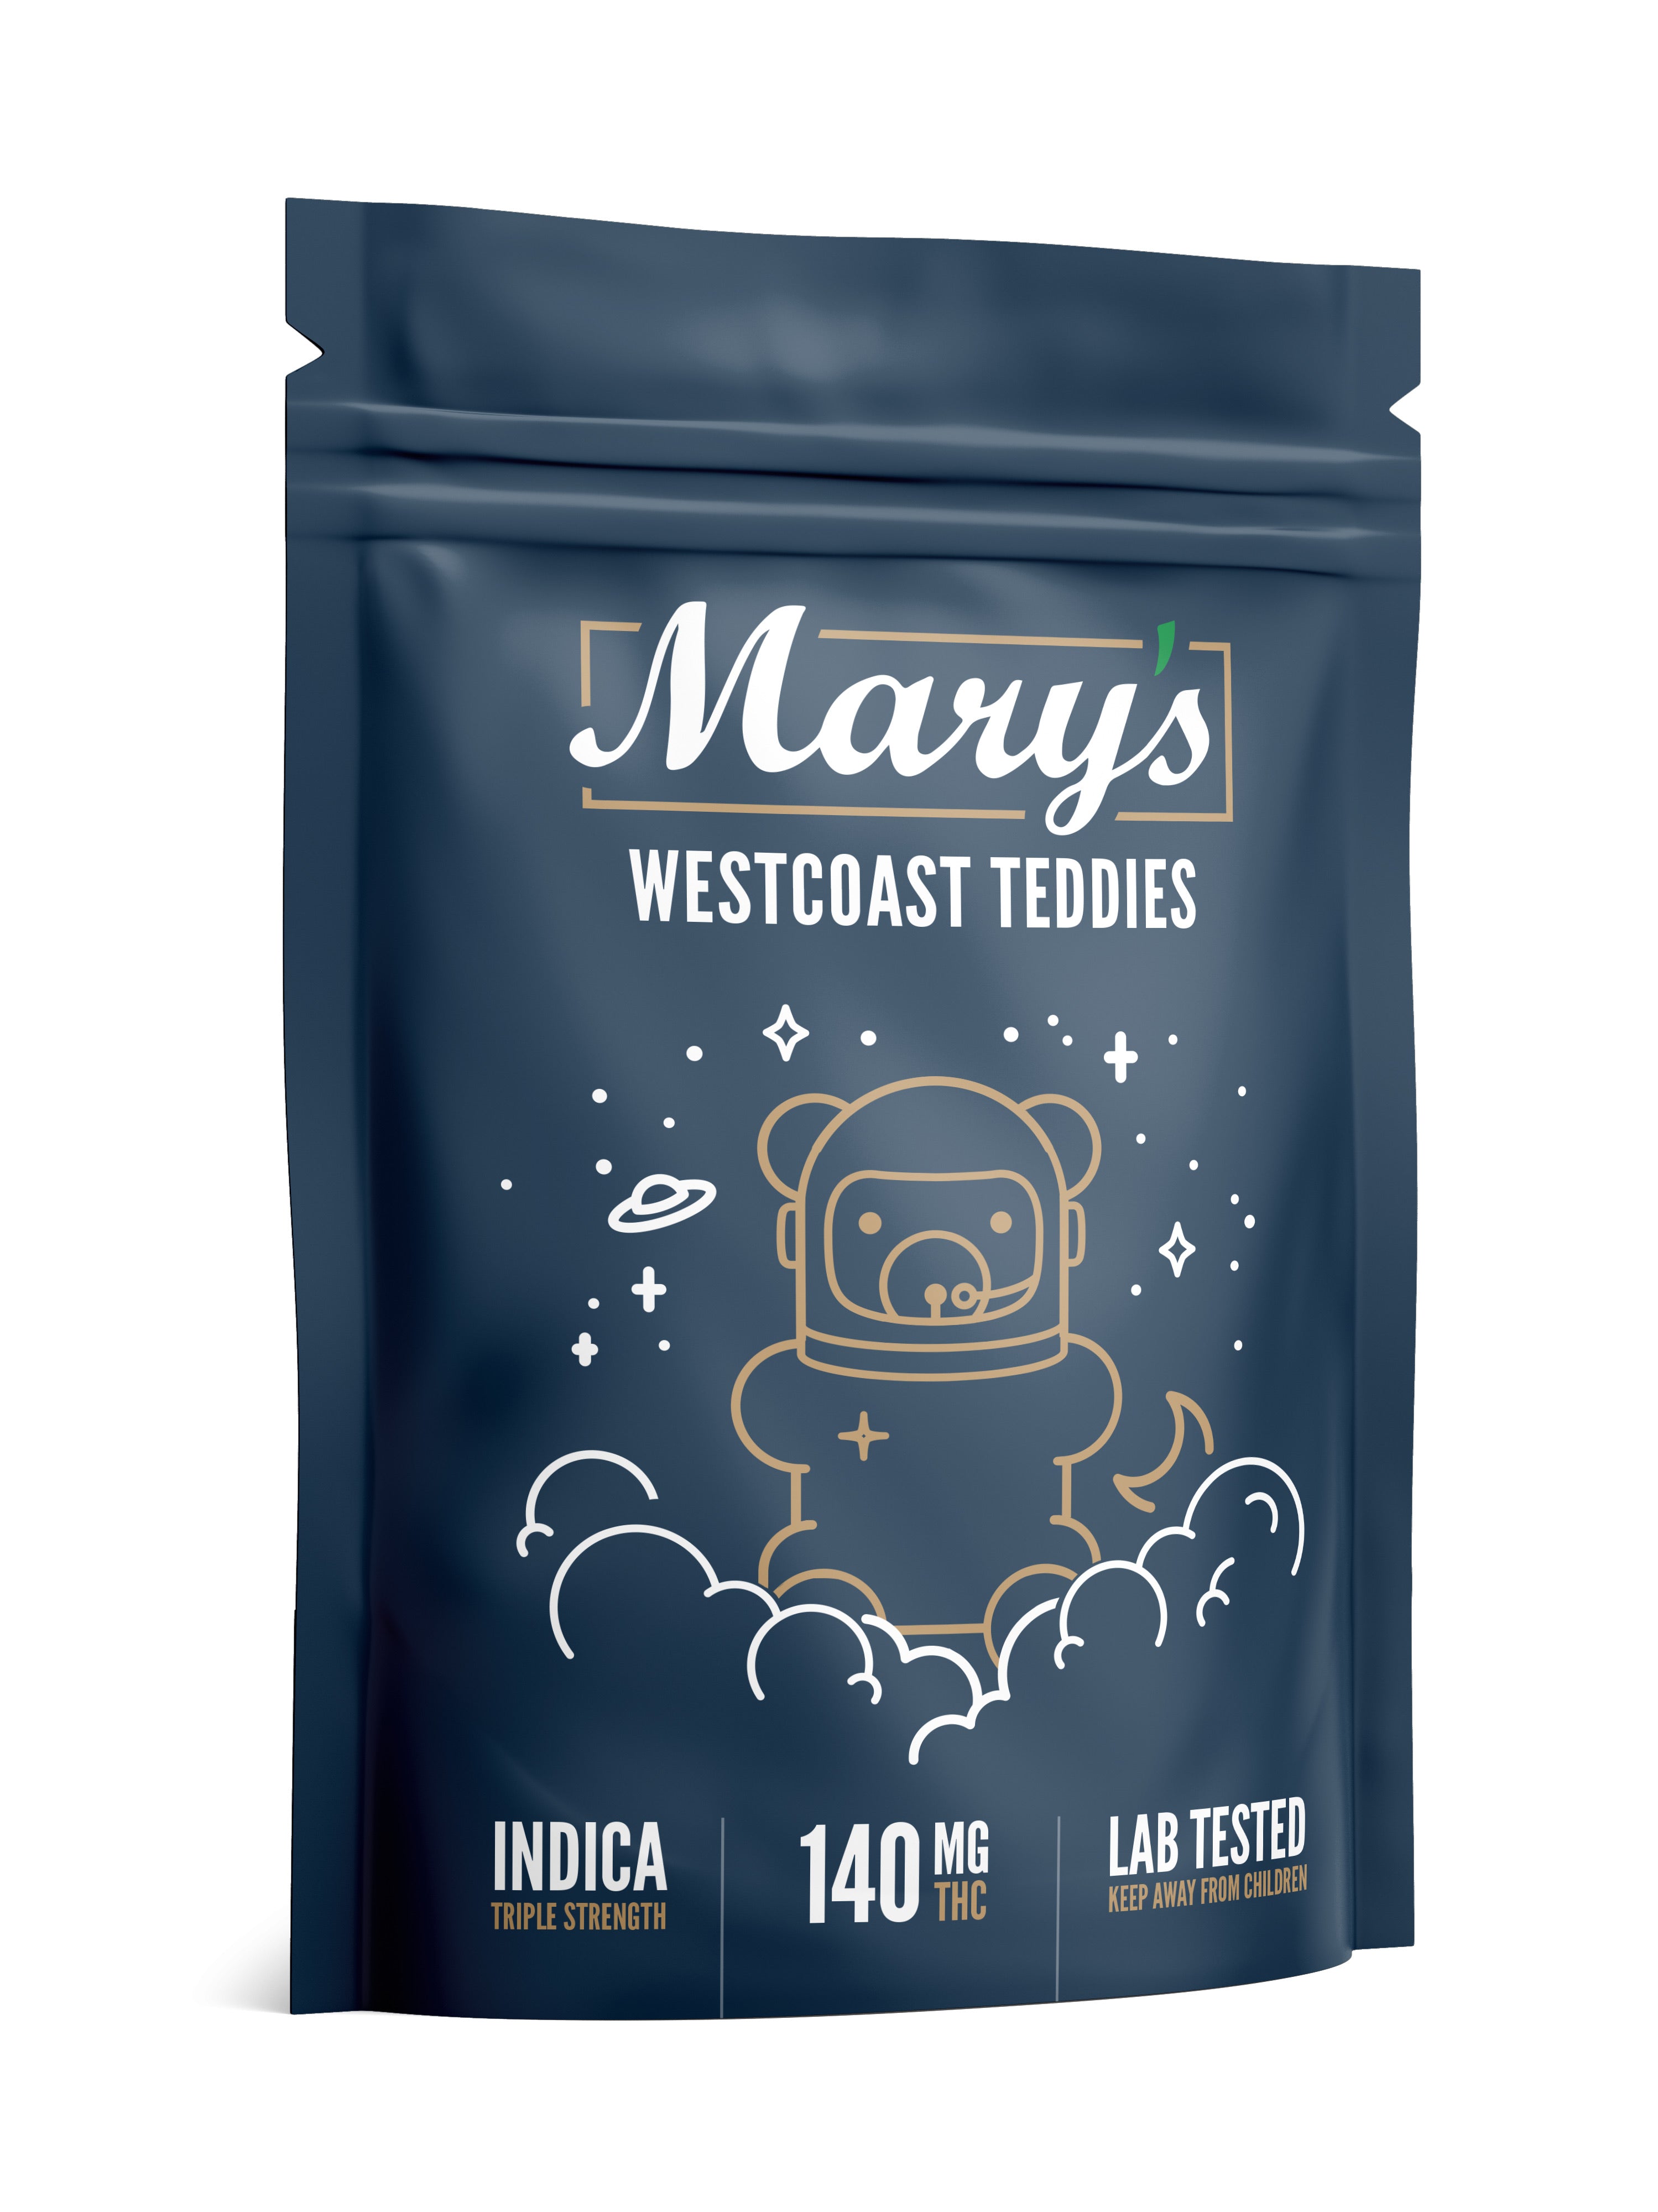 Triple Strength Sativa West Coast Teddies 140mg THC (Mary’s Medibles)